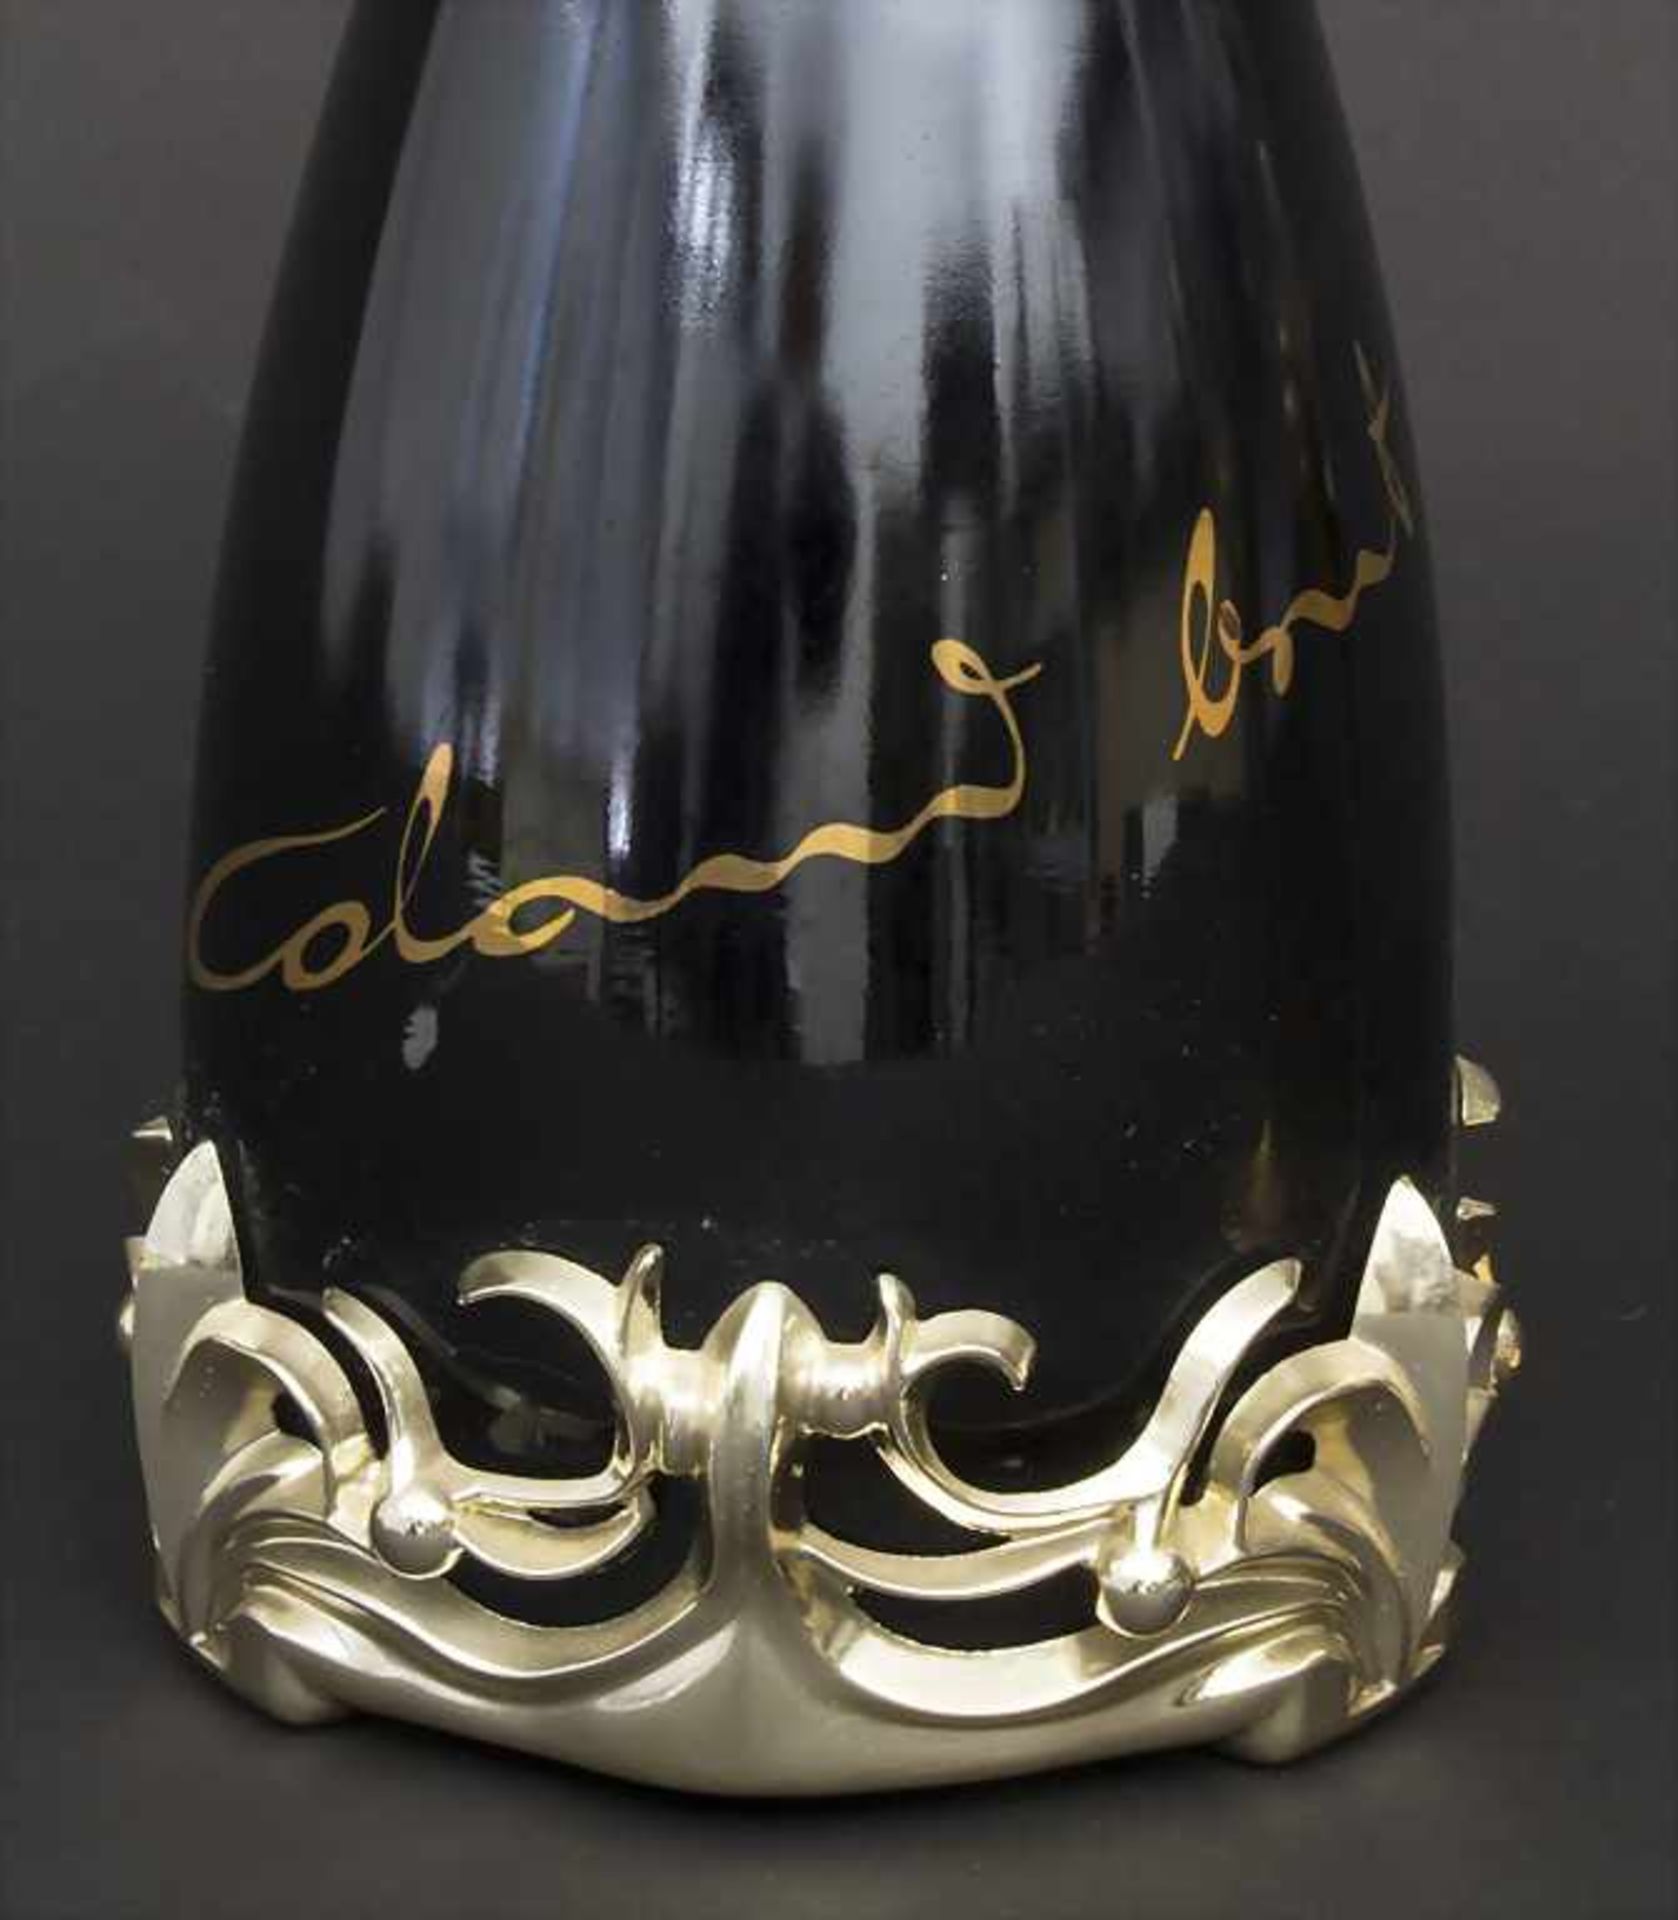 Sektflasche mit zwei Flöten / A champagne bottle with 2 glasses, Luigi Colani, - Image 2 of 5